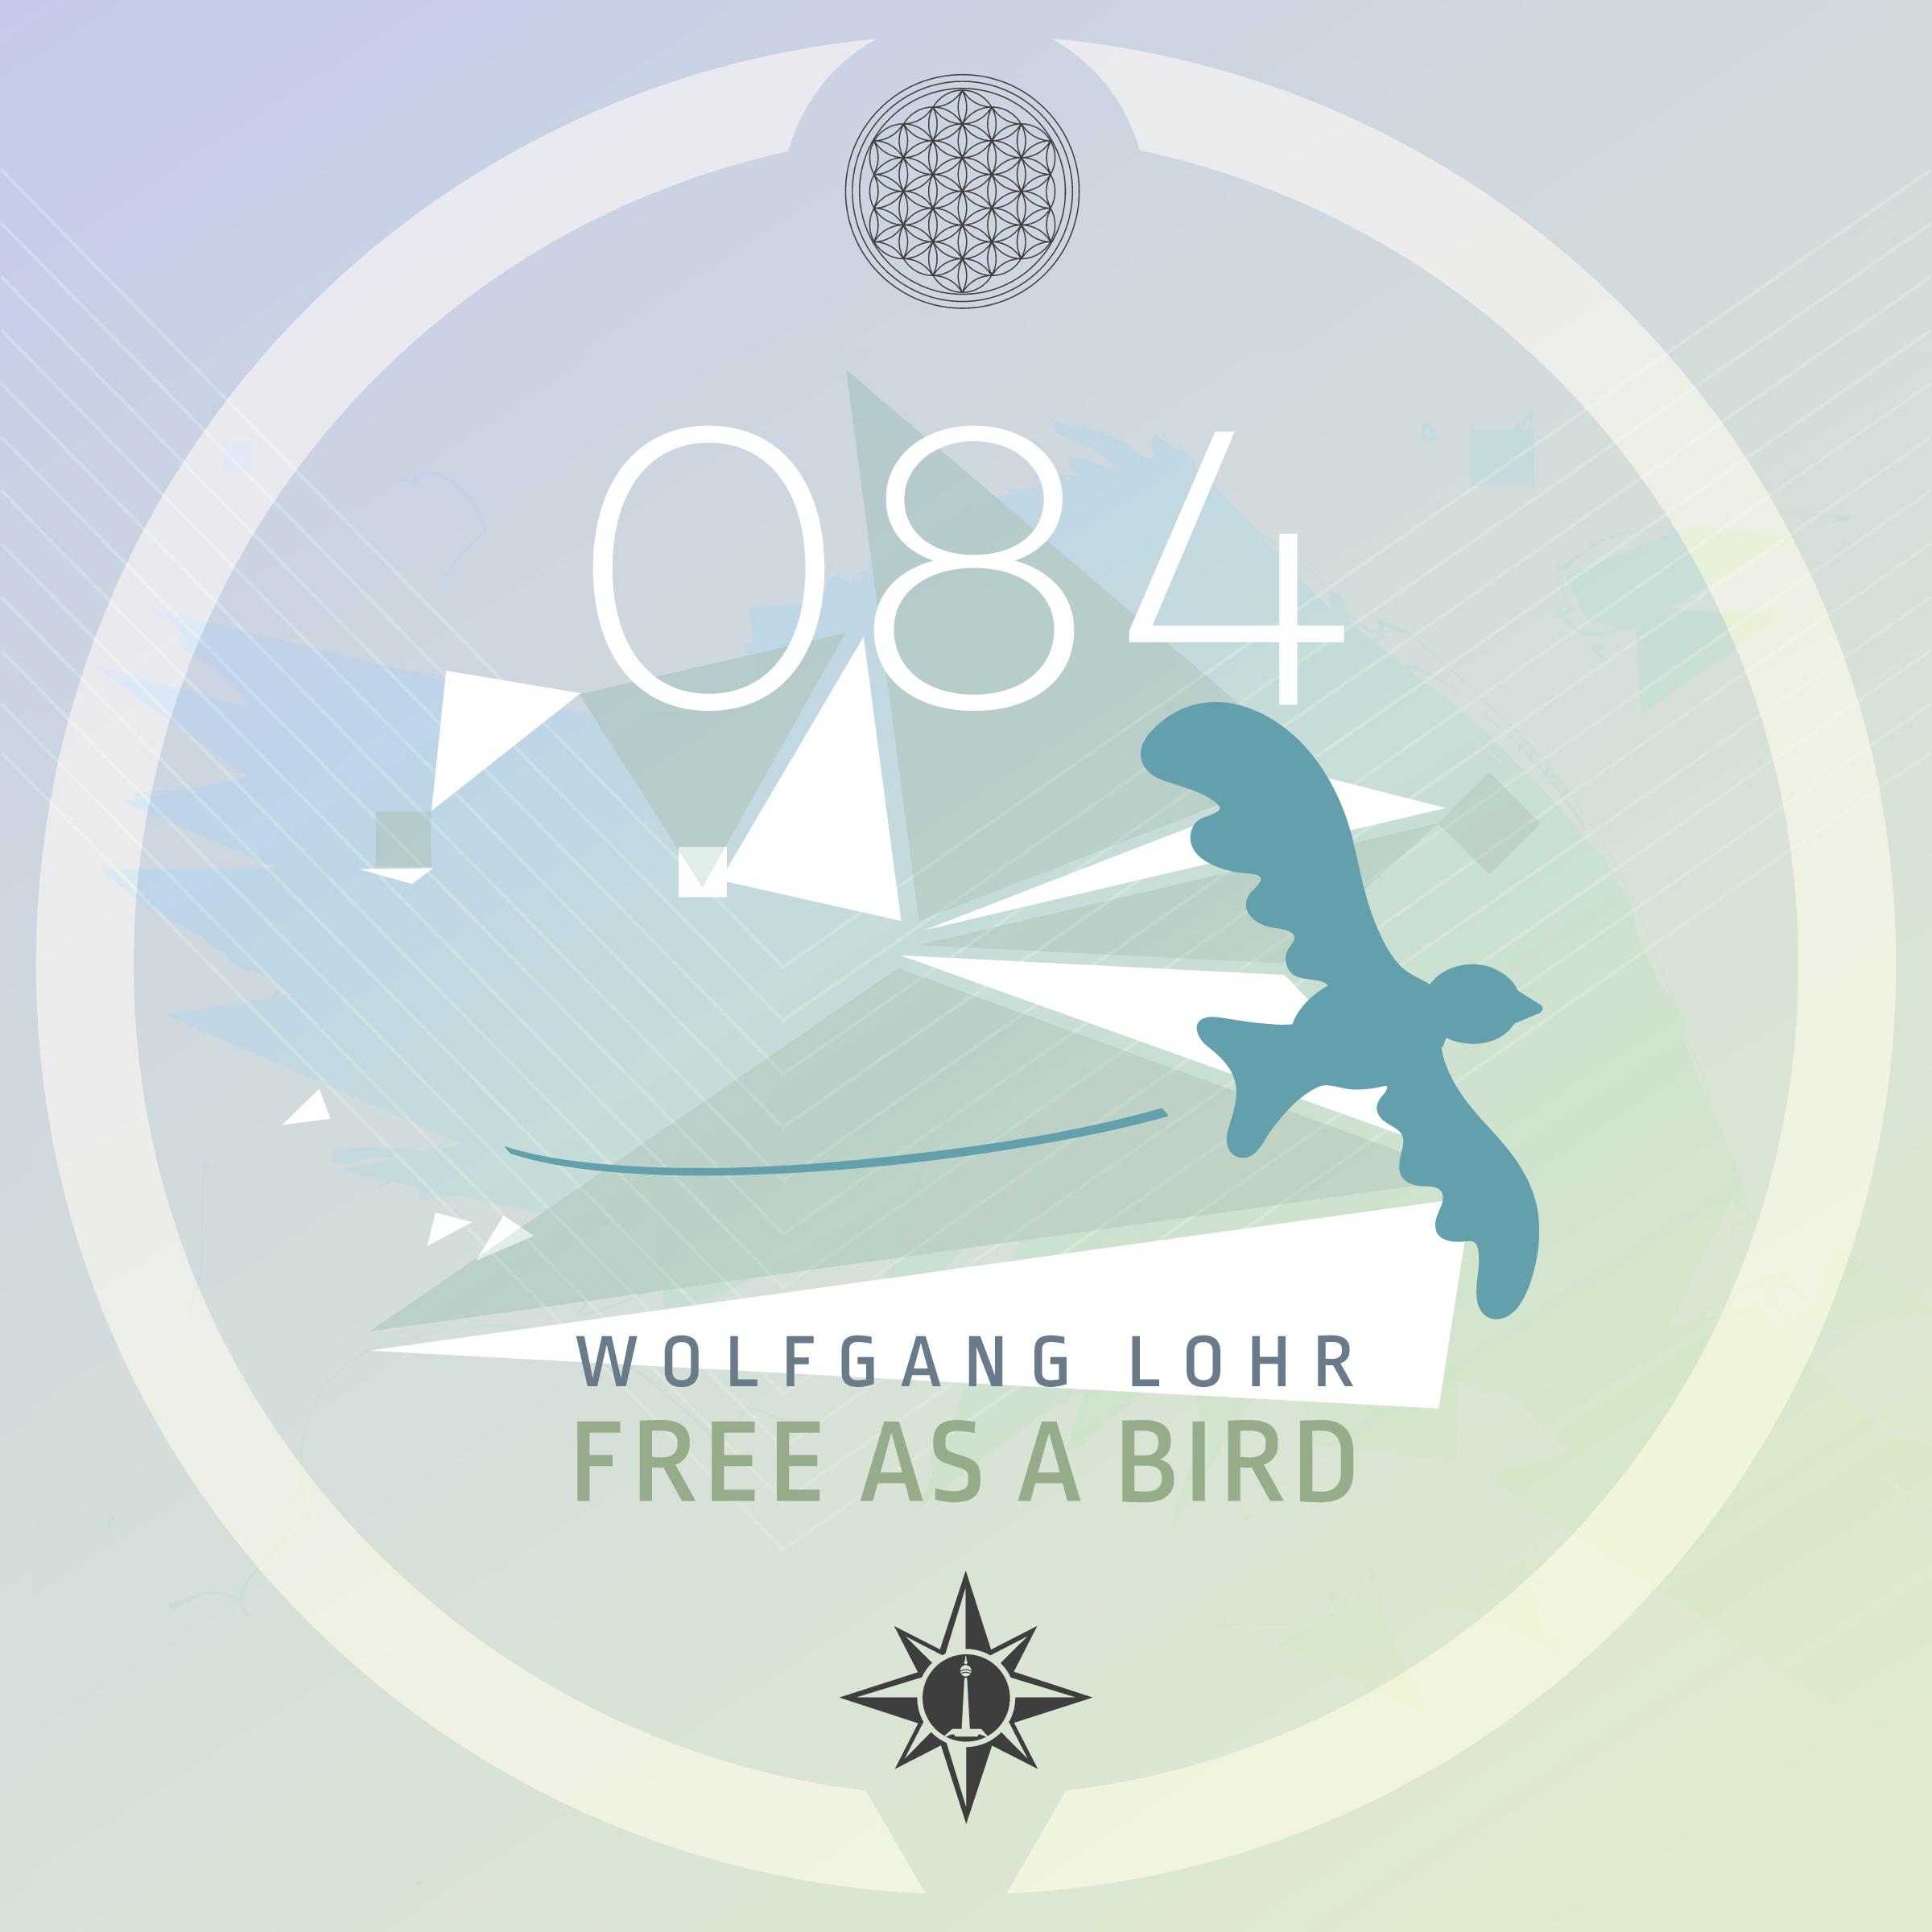 Free As a Bird